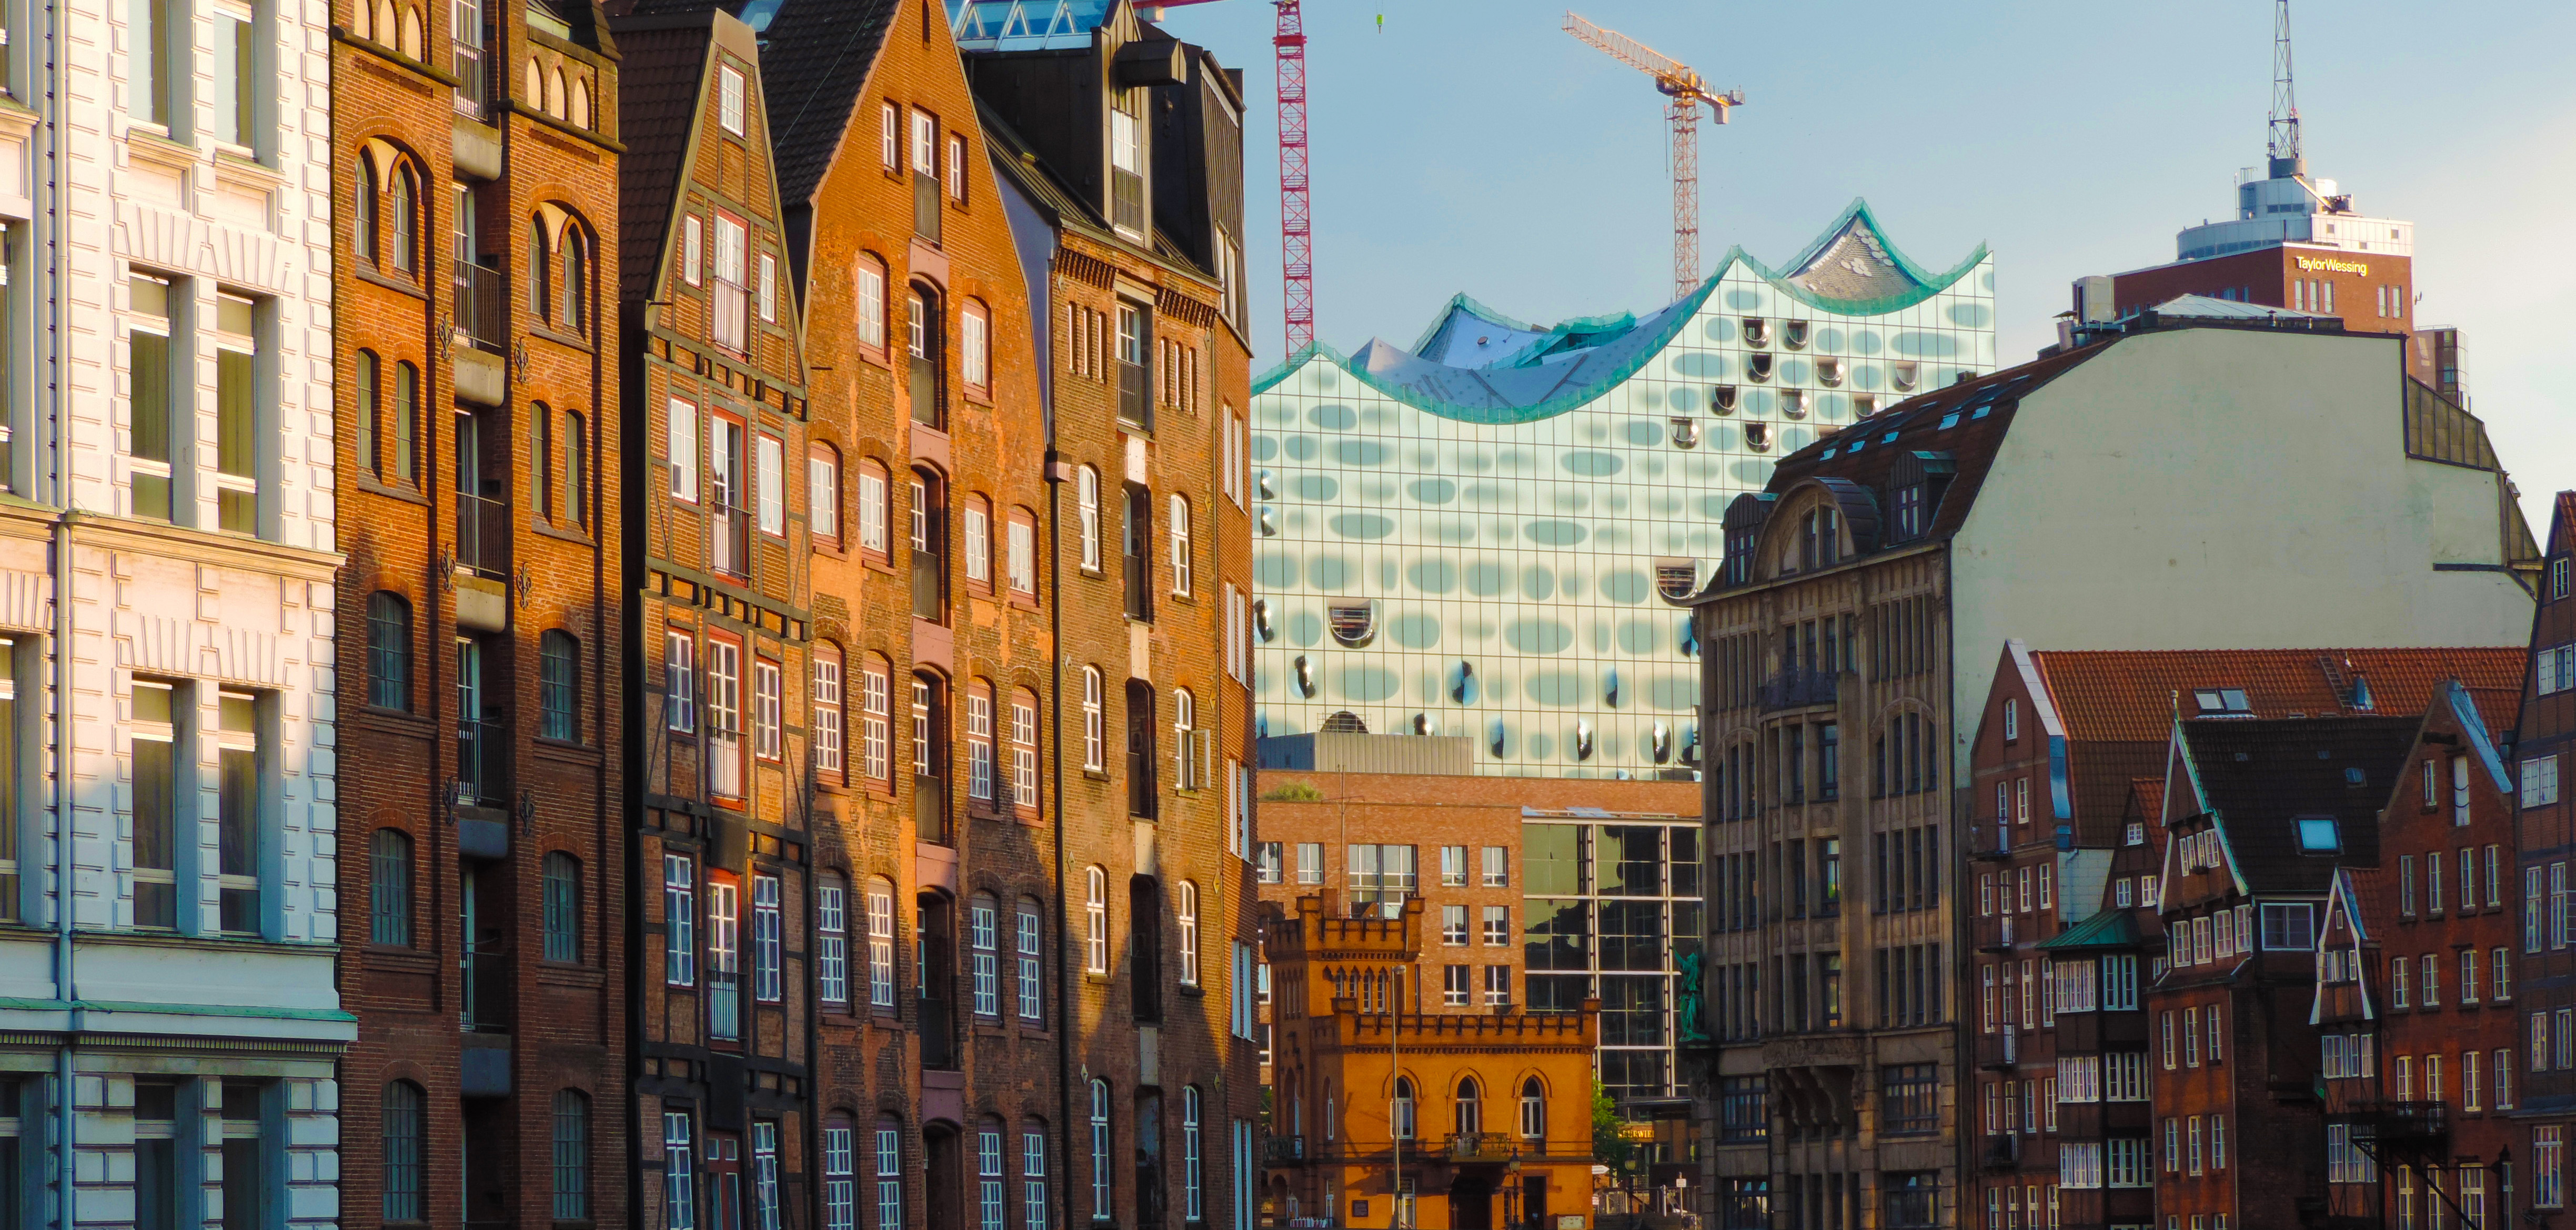 CAPA 2 - Hamburg, a segunda maior cidade da Alemanha